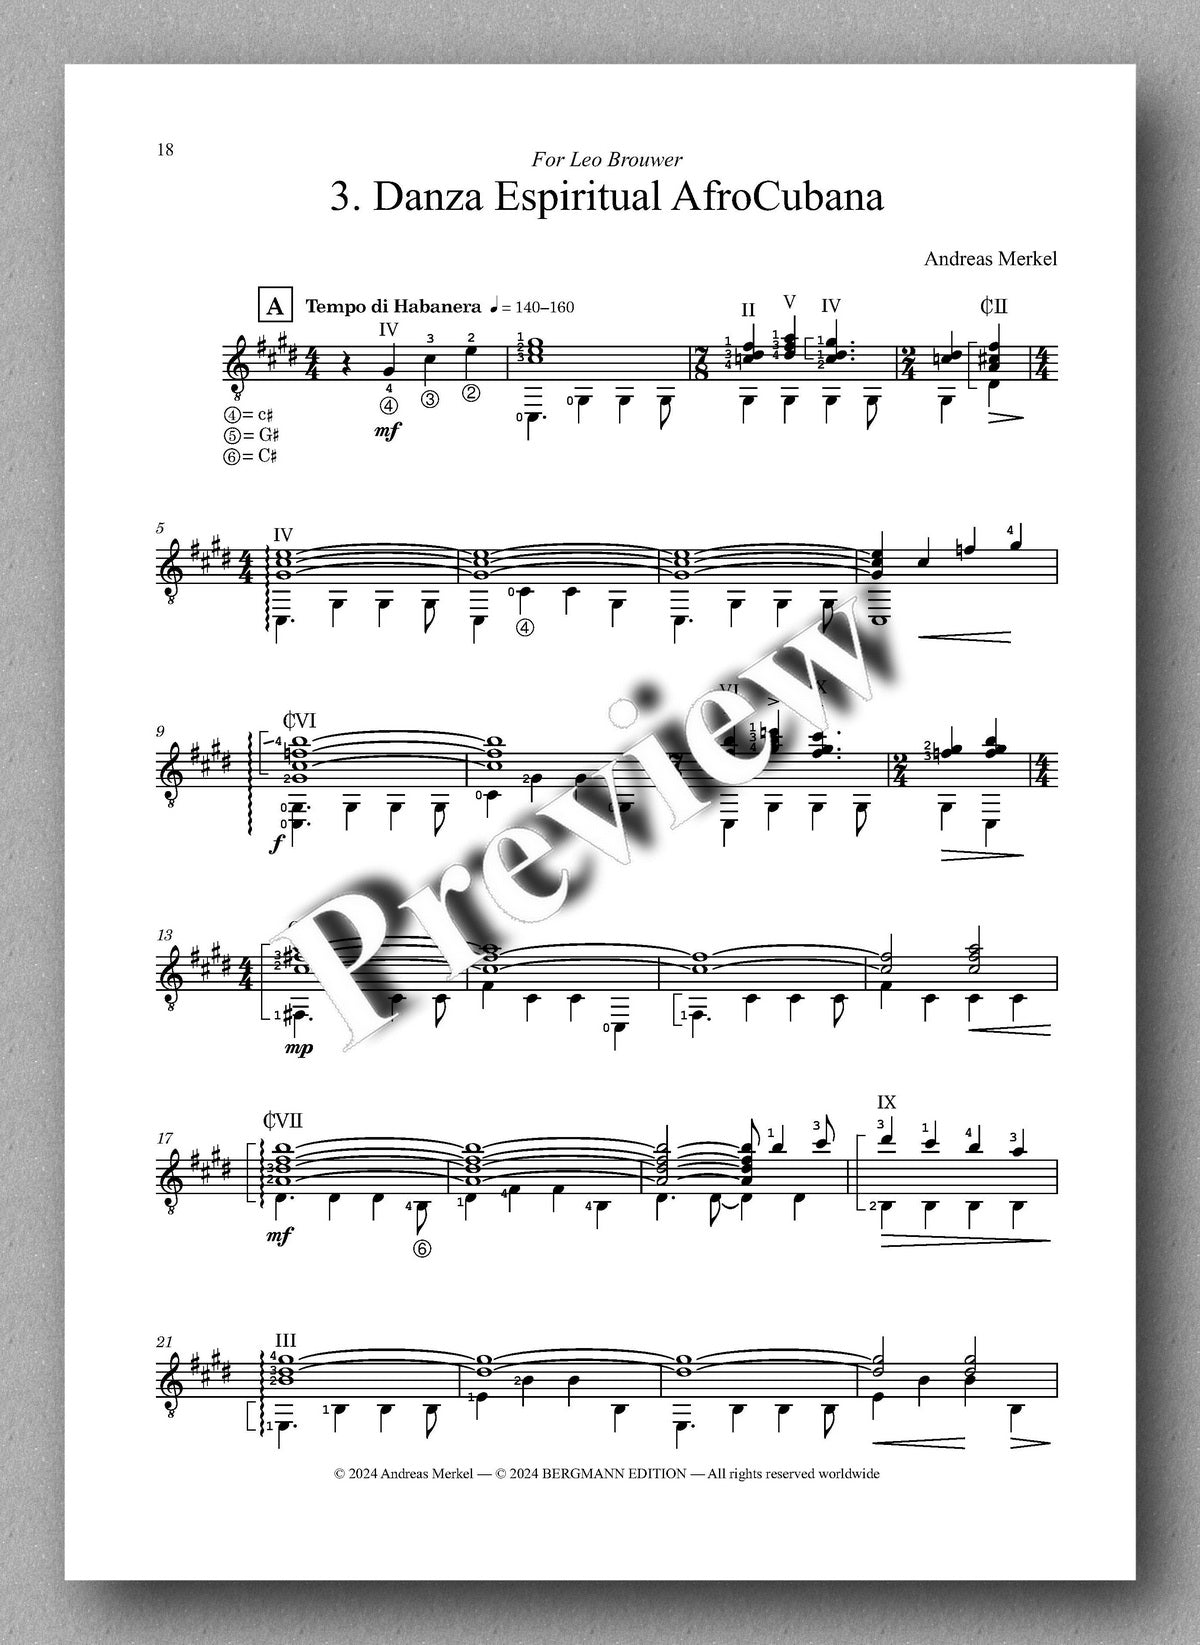 Andreas Merkel, Suite Danzas Cubanas Traditionales, op. 37 - preview of the music score 3